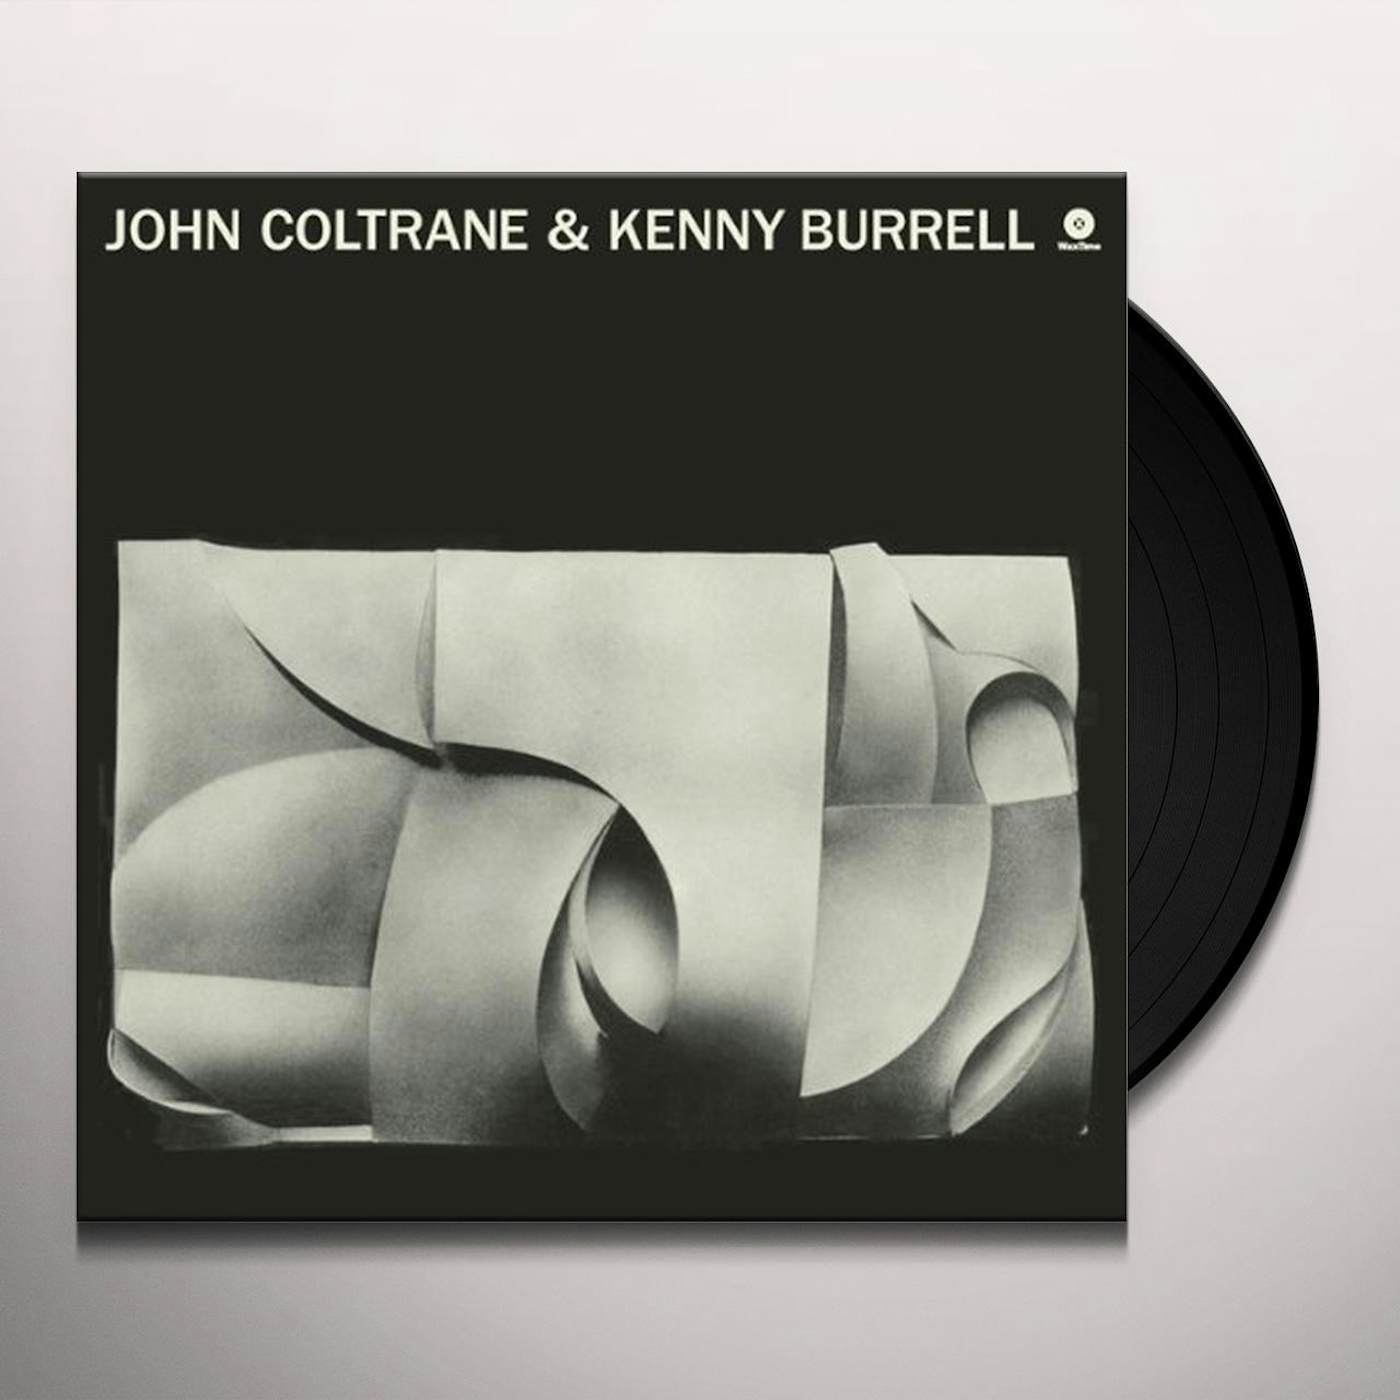 JOHN COLTRANE & KENNY BURRELL (BONUS TRACK) Vinyl Record - 180 Gram Pressing